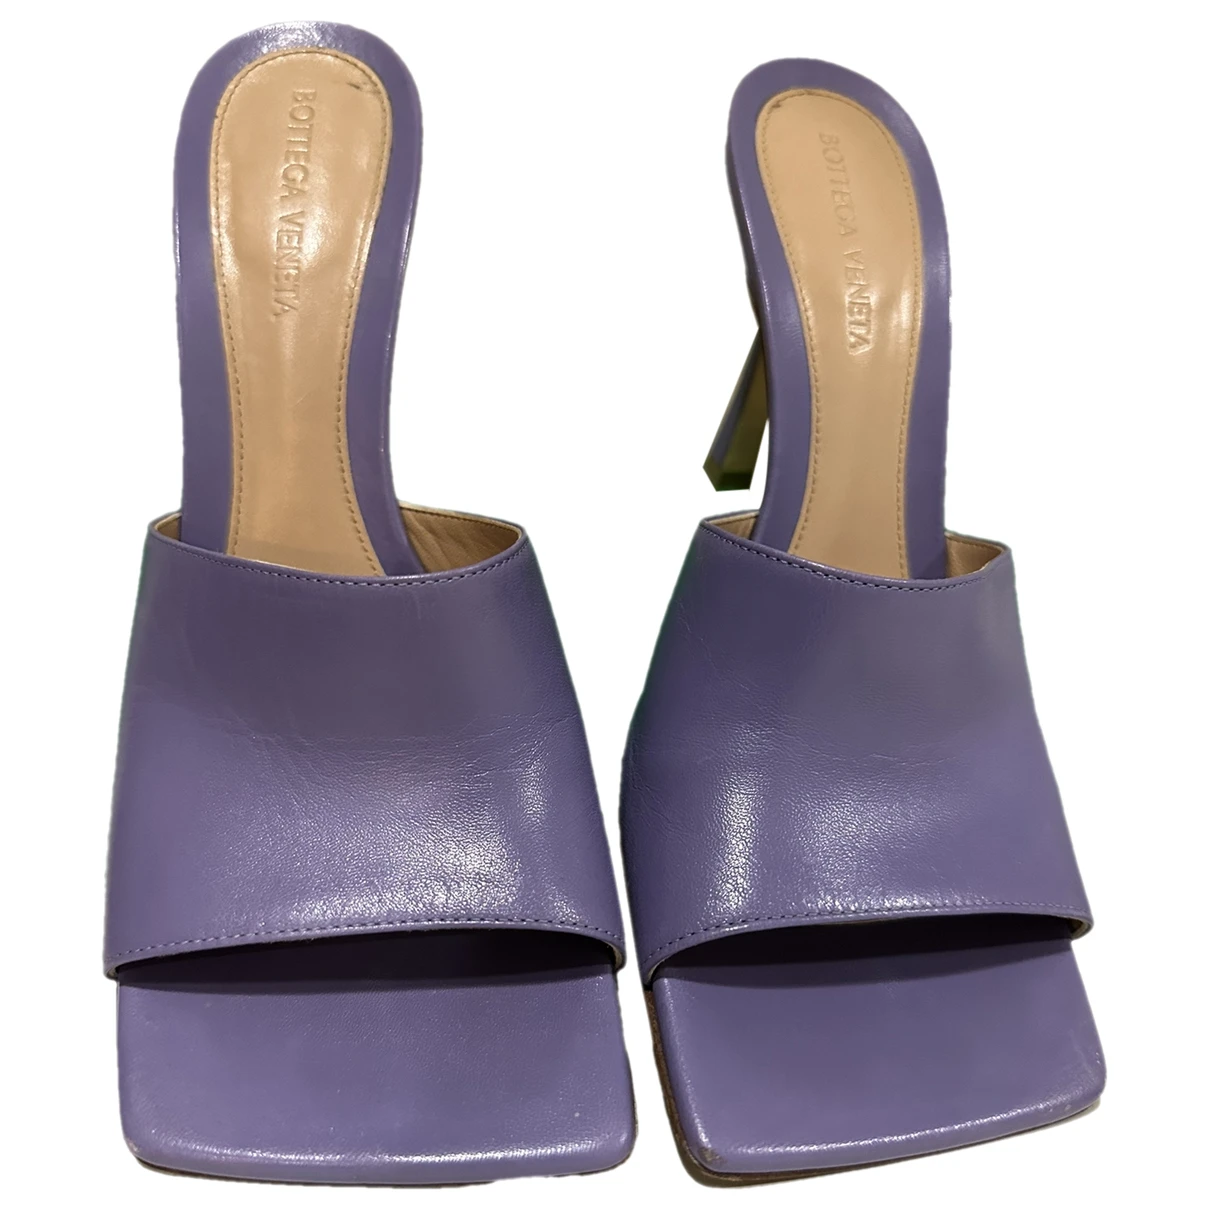 shoes Bottega Veneta mules & clogs for Female Leather 38.5 IT. Used condition